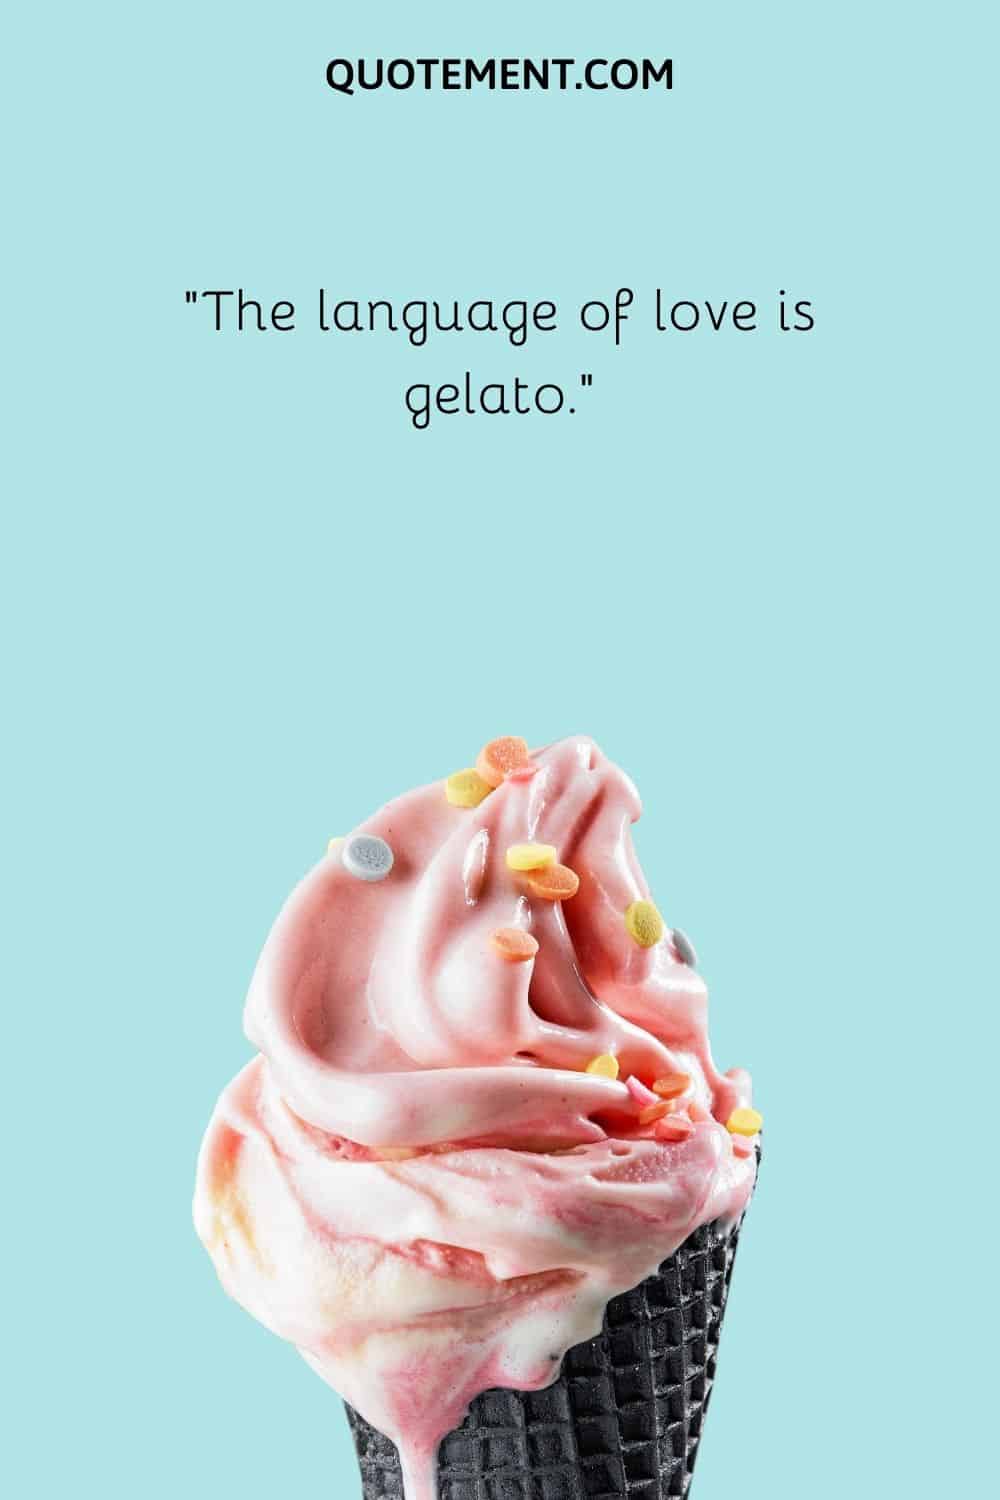 The language of love is gelato